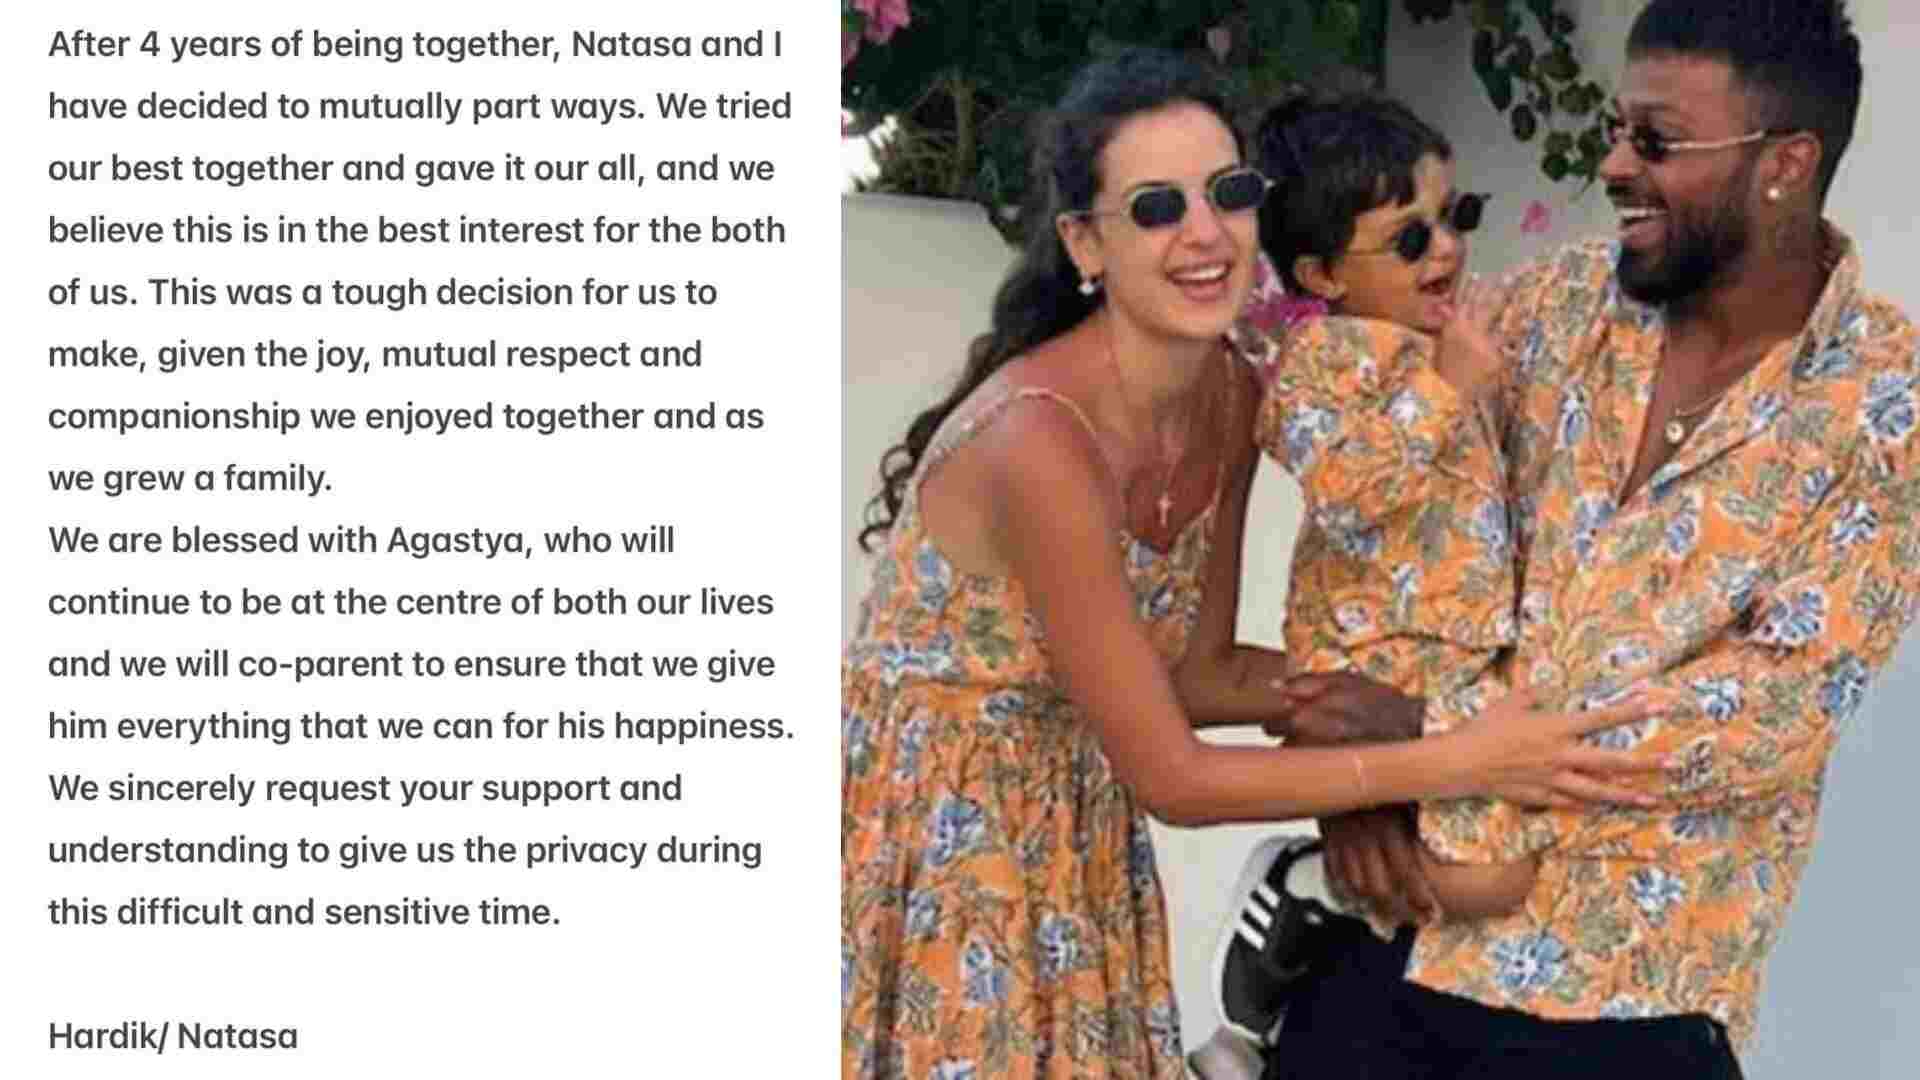 Hardik Pandya and Natasha Stankovic End Marriage, Cricketer’s Emotional T20 World Cup Speech Goes Viral